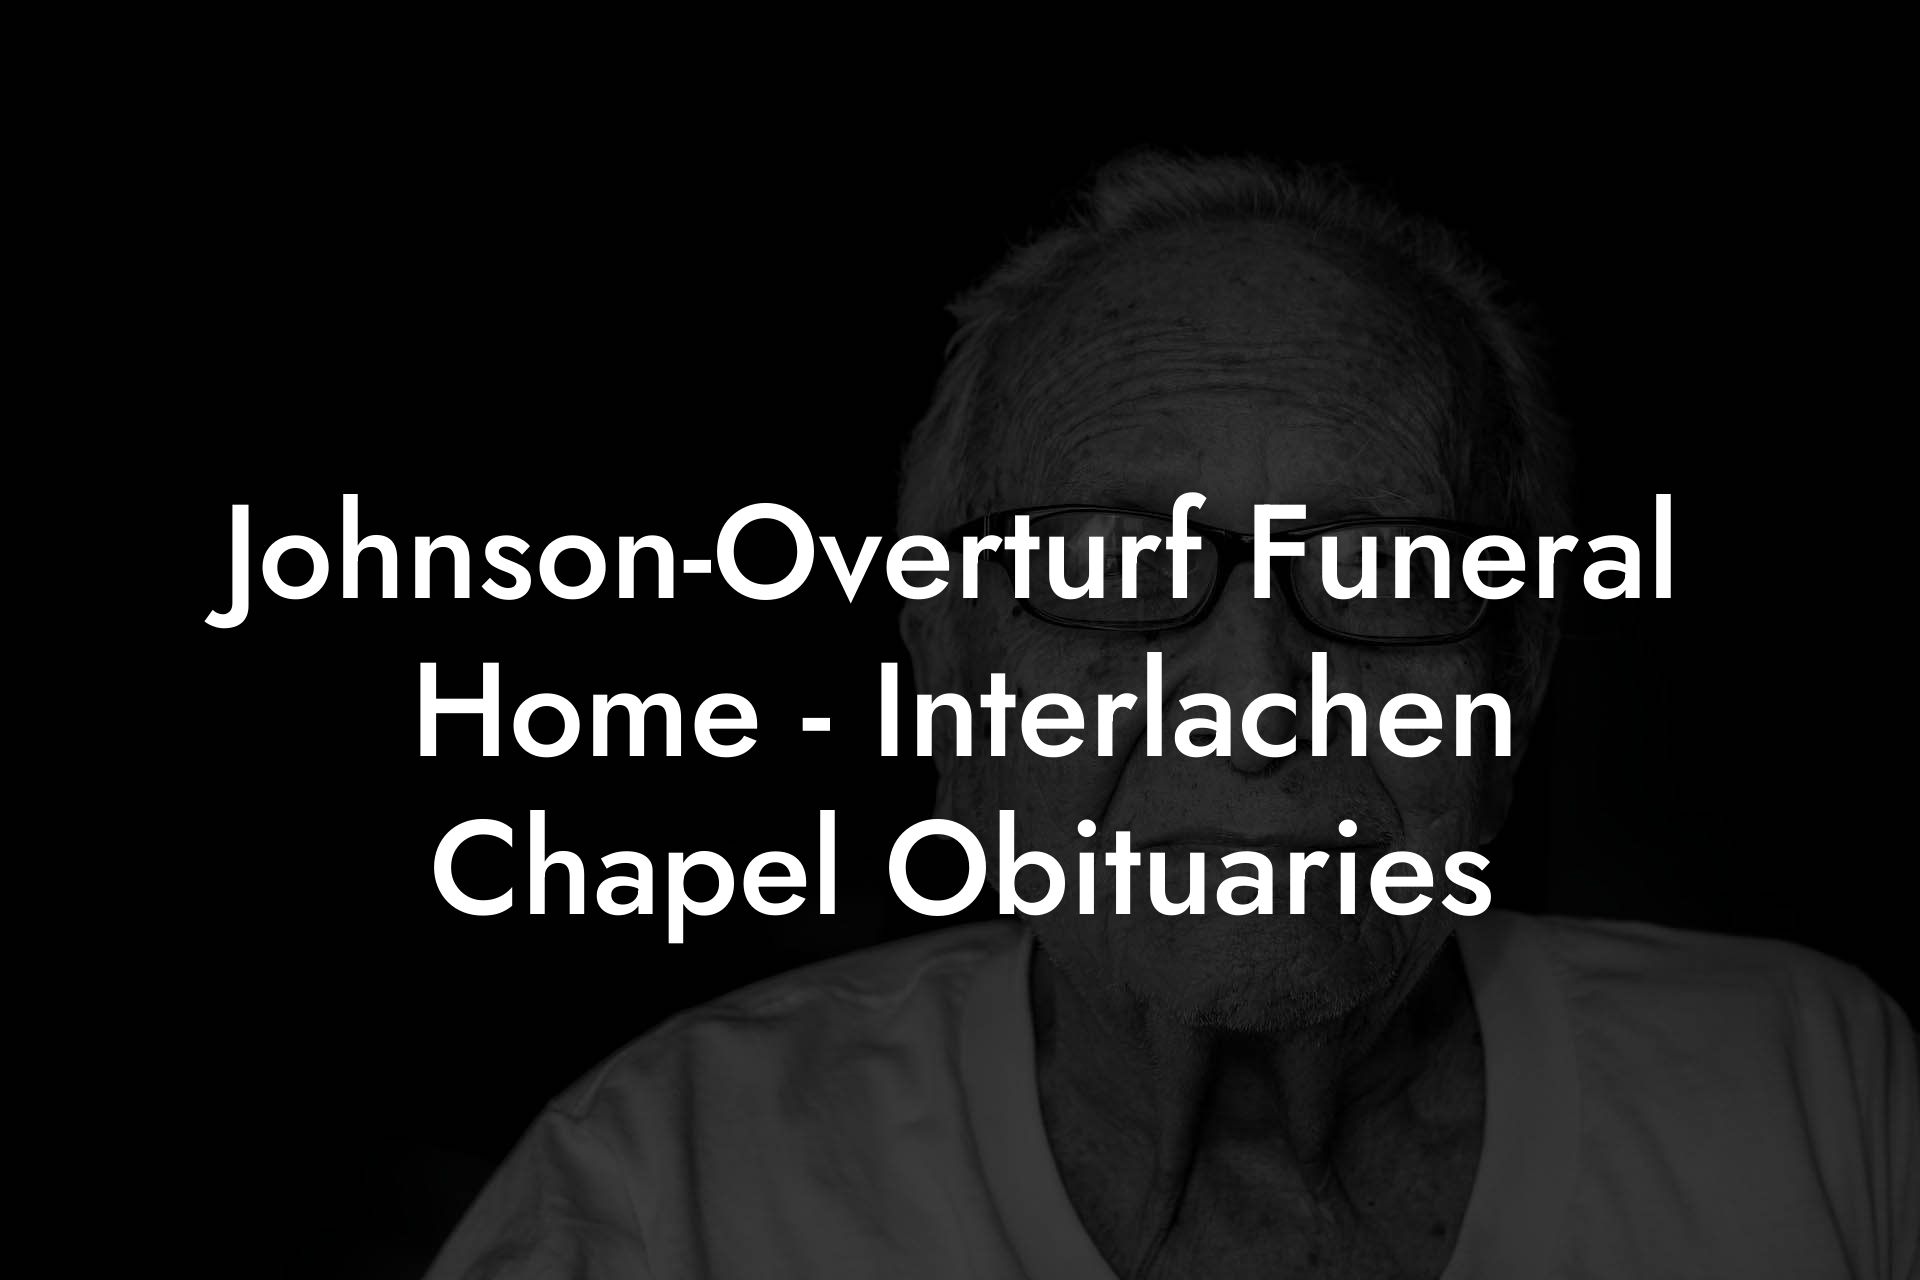 Johnson-Overturf Funeral Home - Interlachen Chapel Obituaries